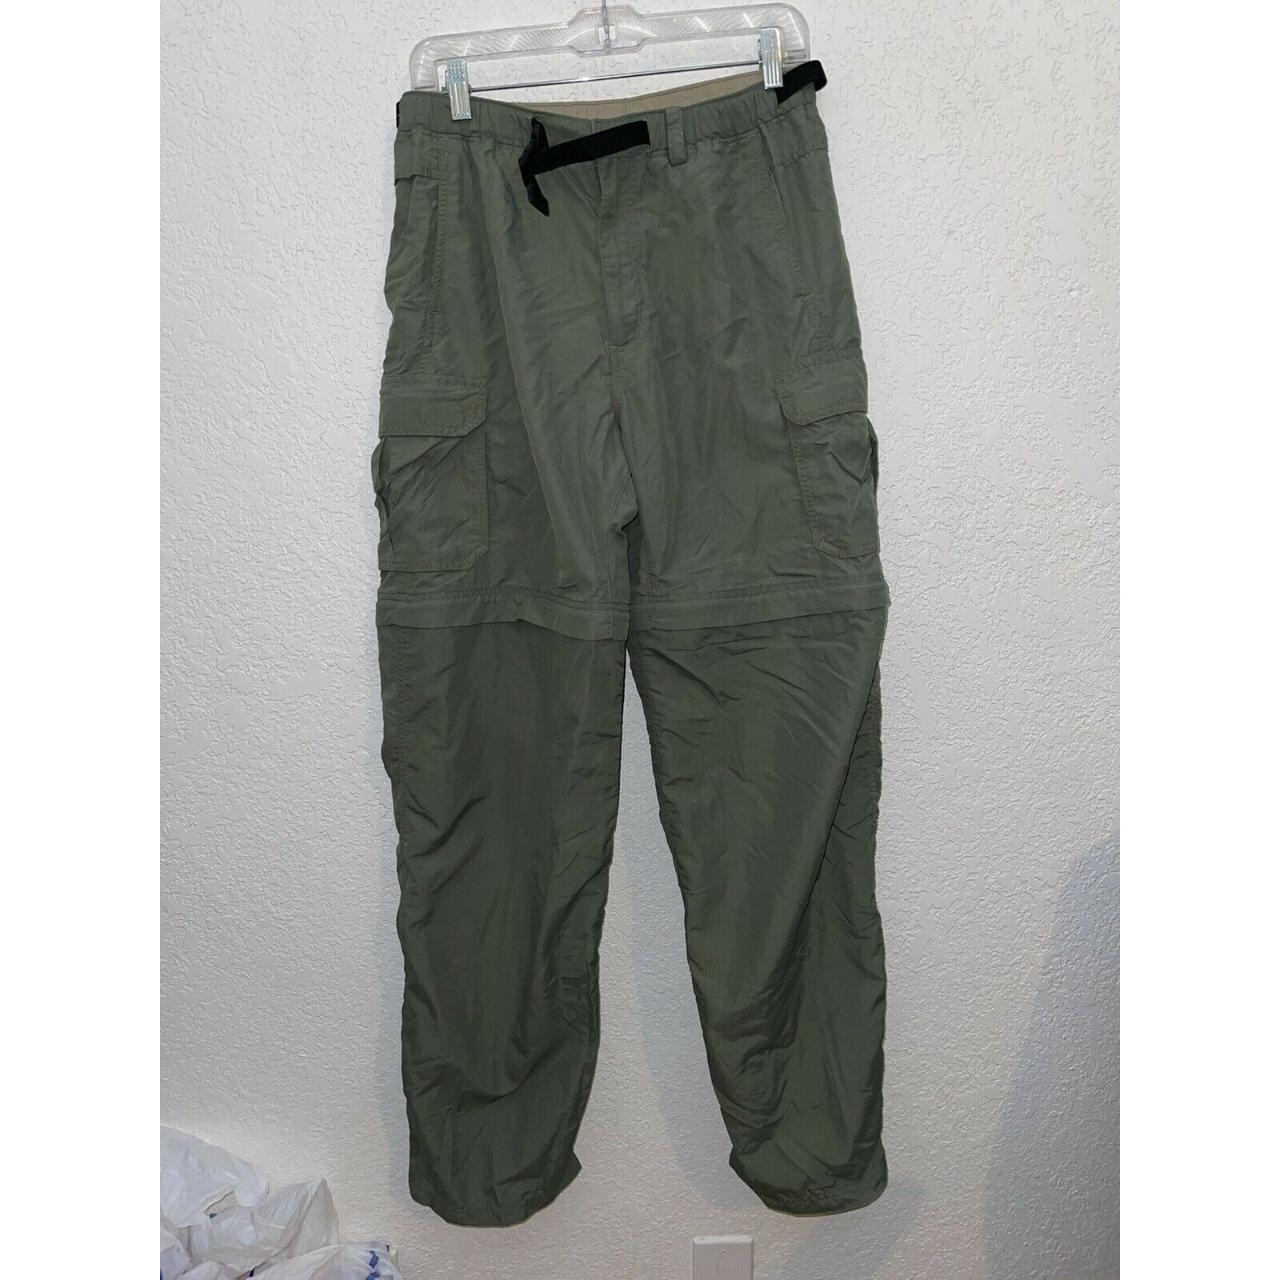 REI Men's Pants UPF 50+ Nylon Hiking Fishing Camp... - Depop